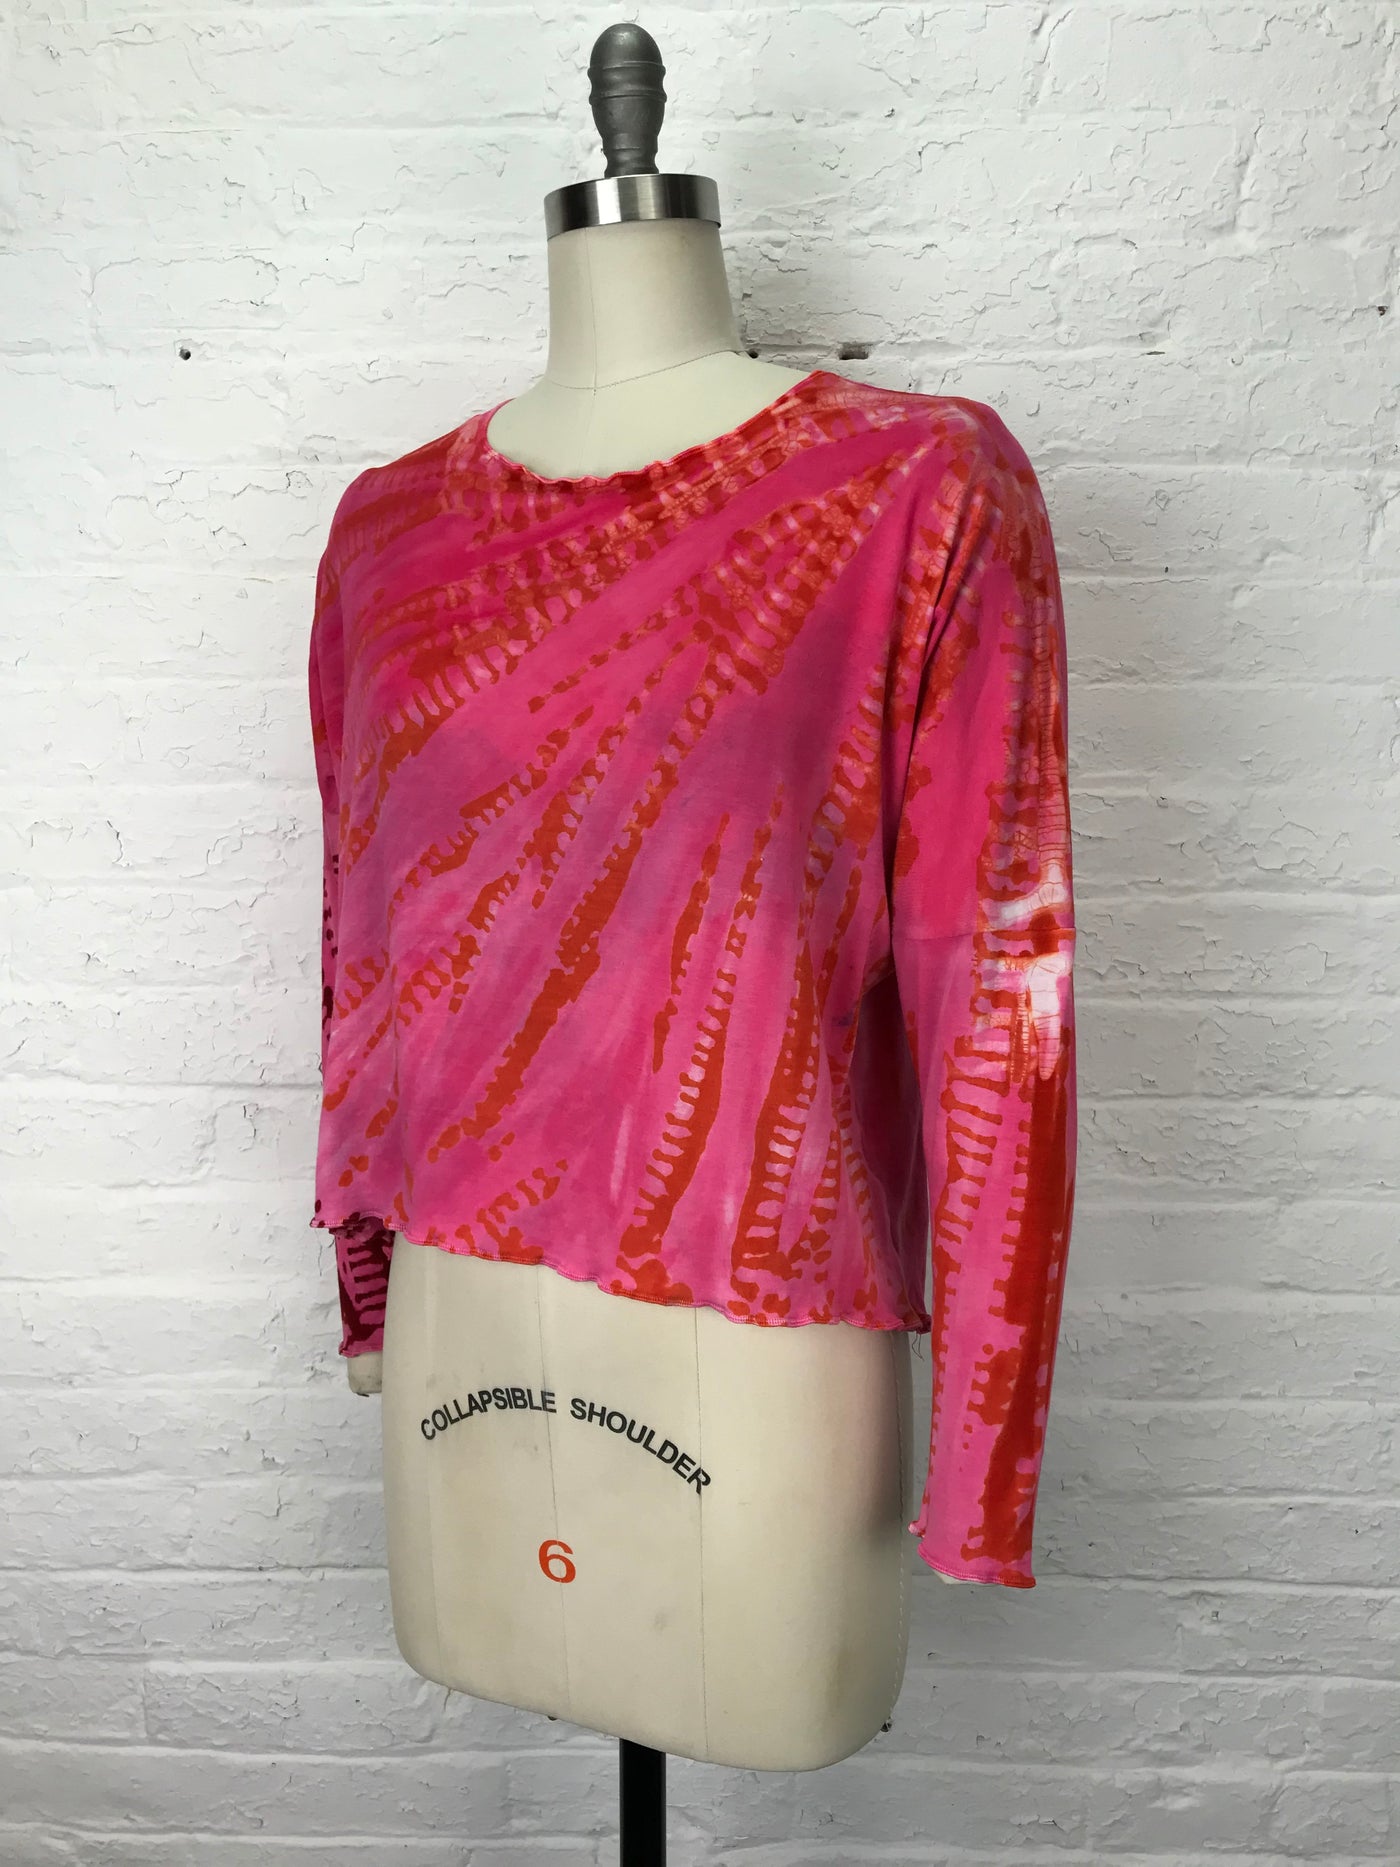 Juni Long Sleeve Petite Top in Pink and Orange Spiderwebs - One size